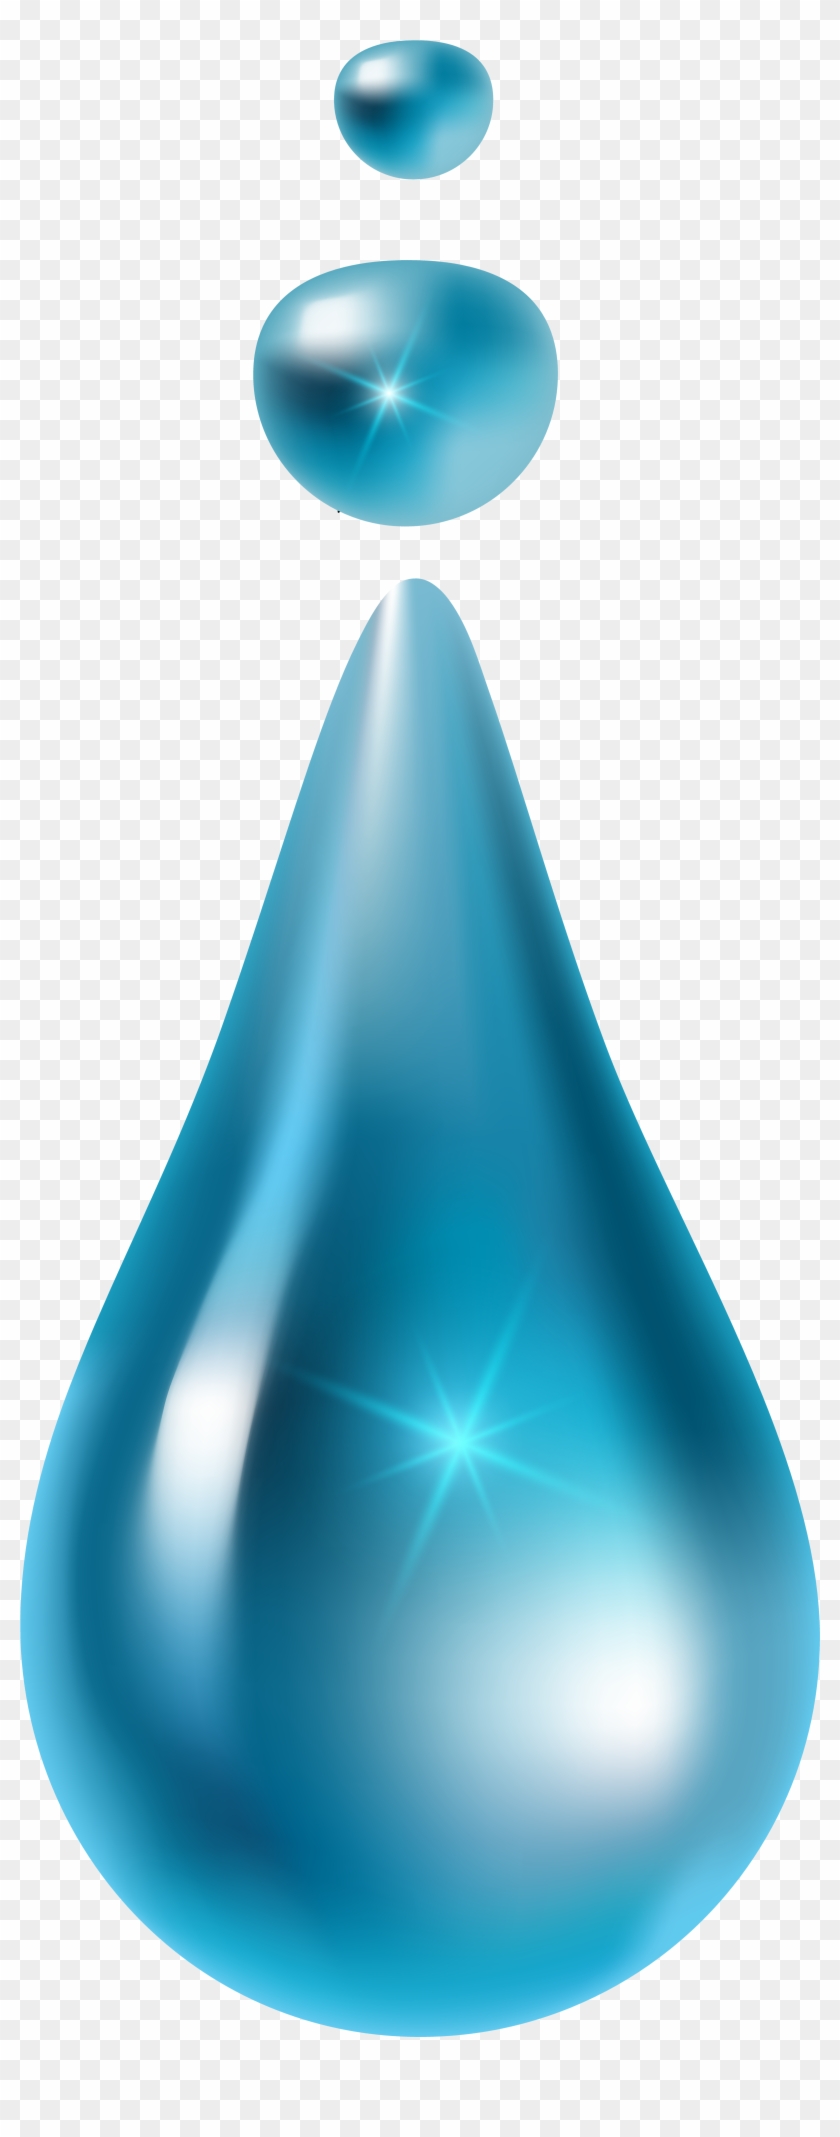 Water Drop Png Clip Art Image - Transparent Water Drop Png #568910